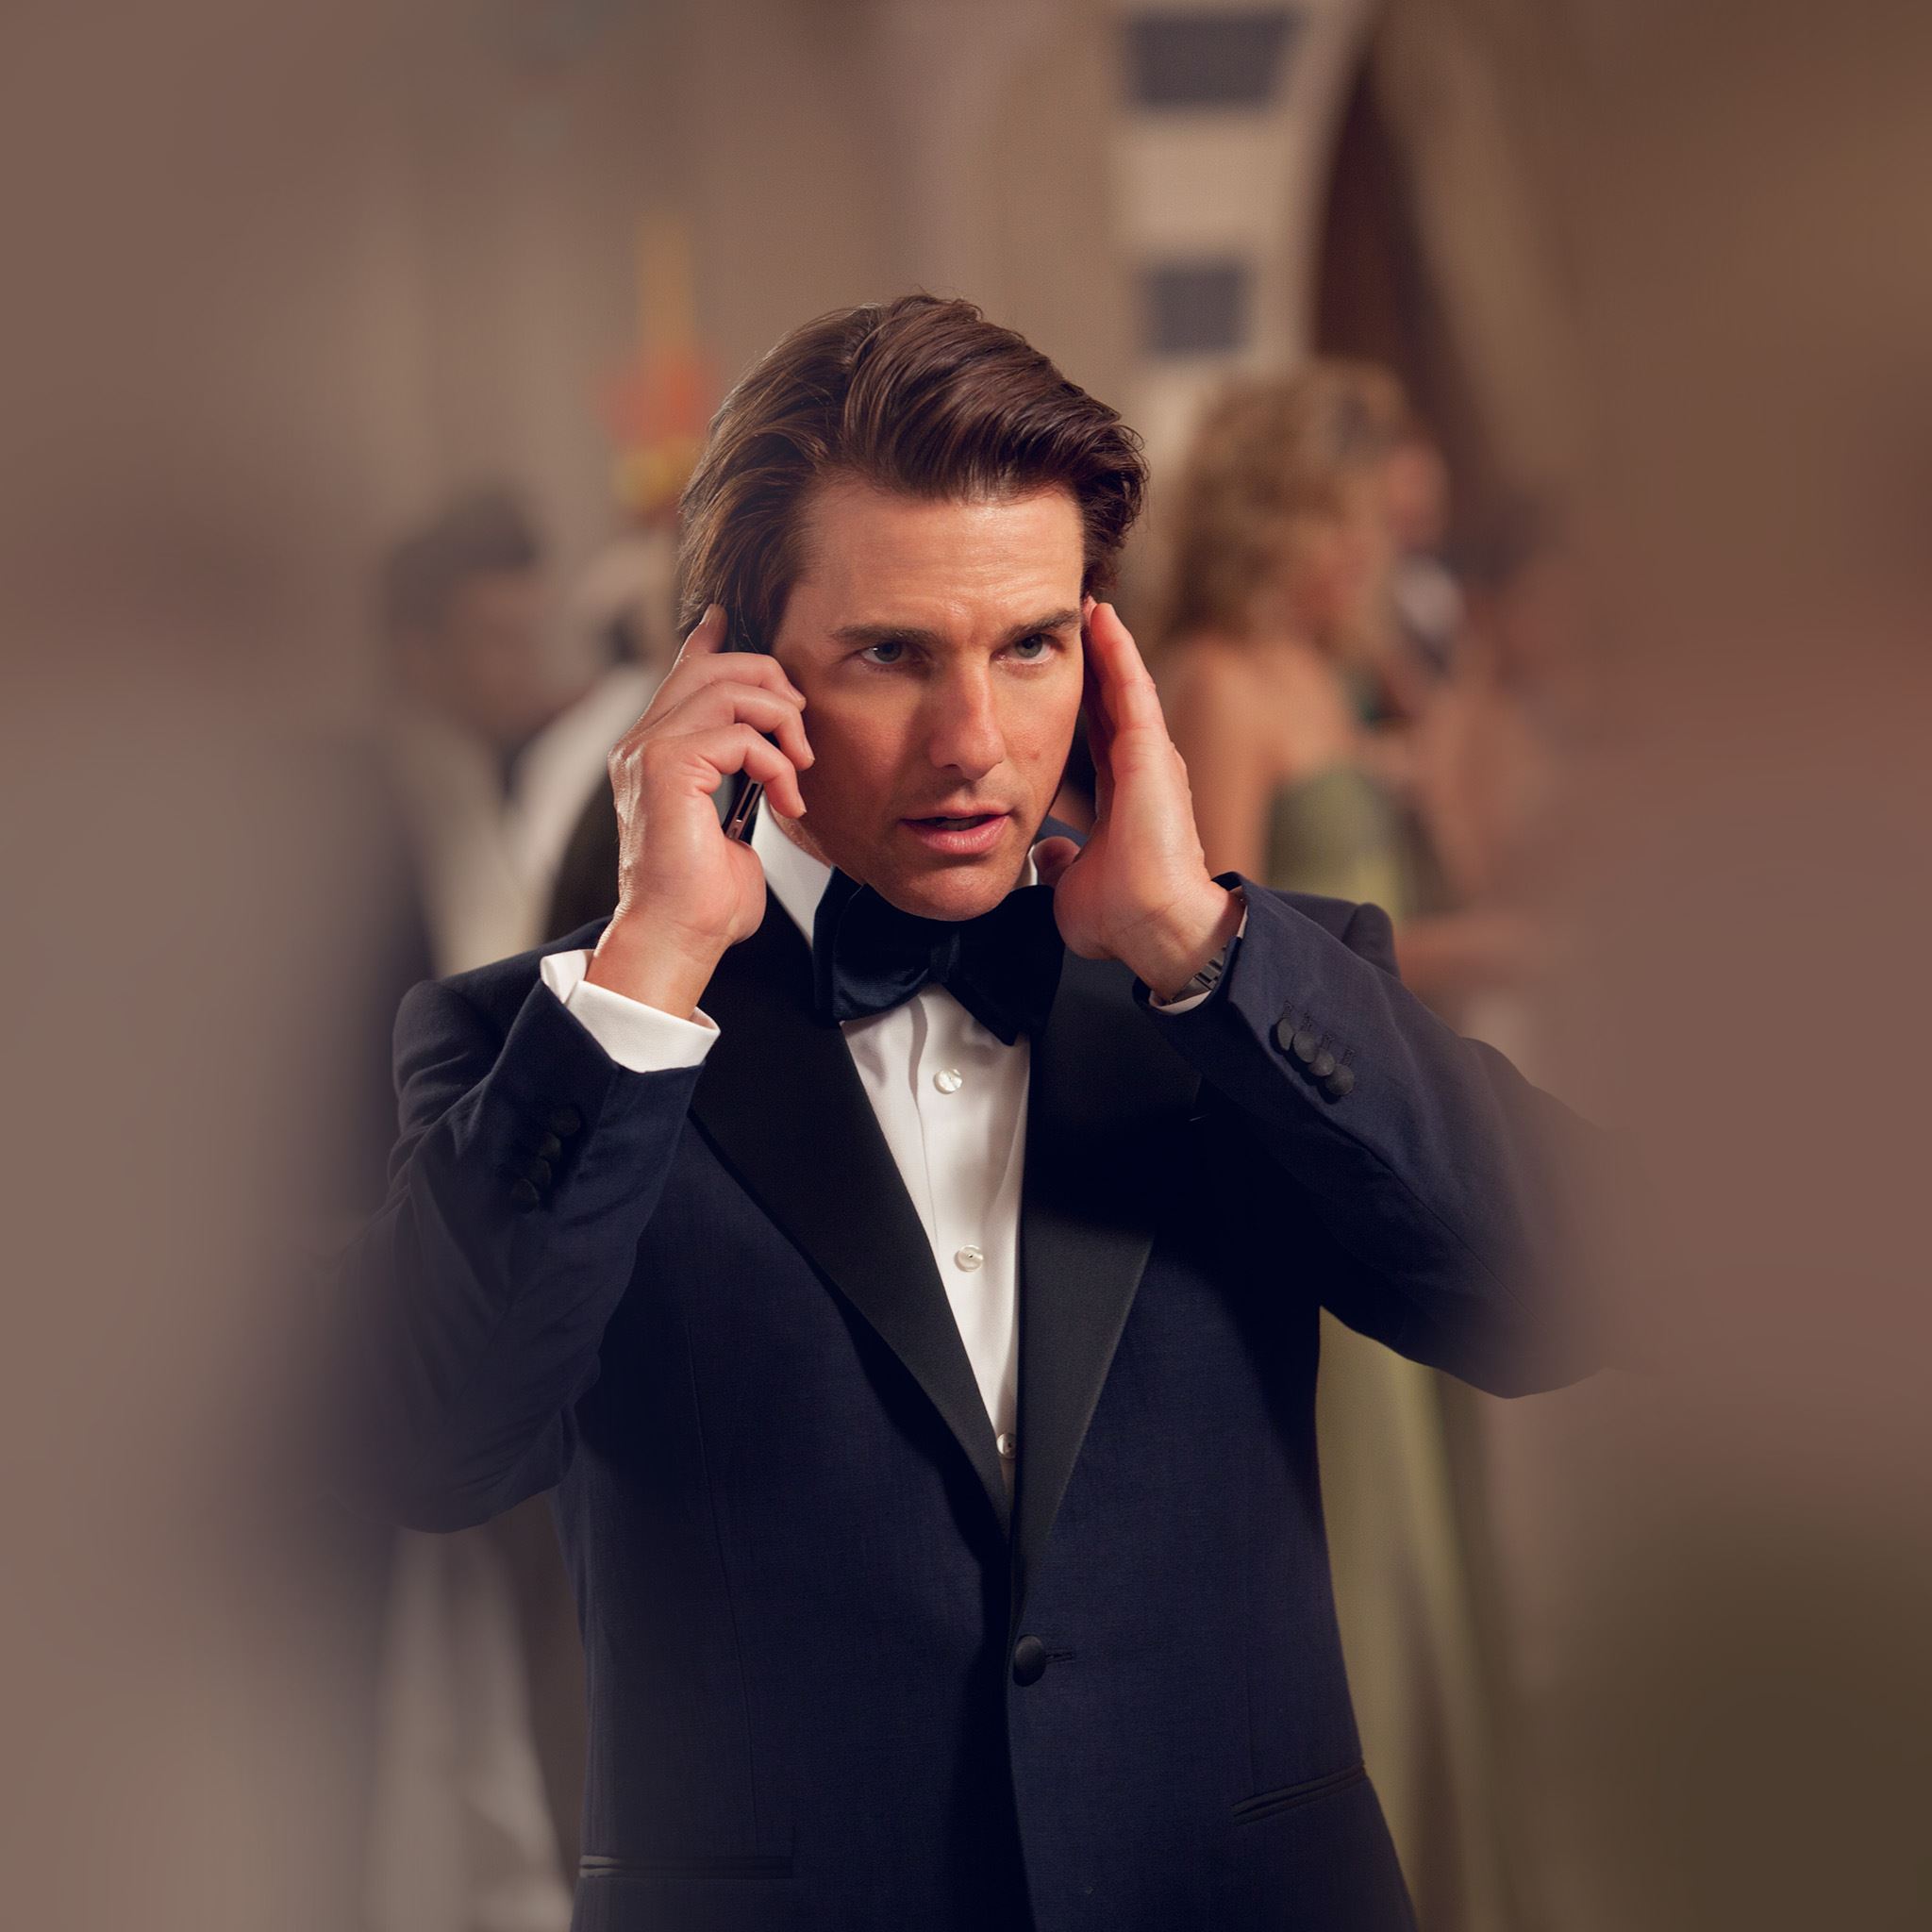 Does Tom Cruise Present A Problem For James Bond?